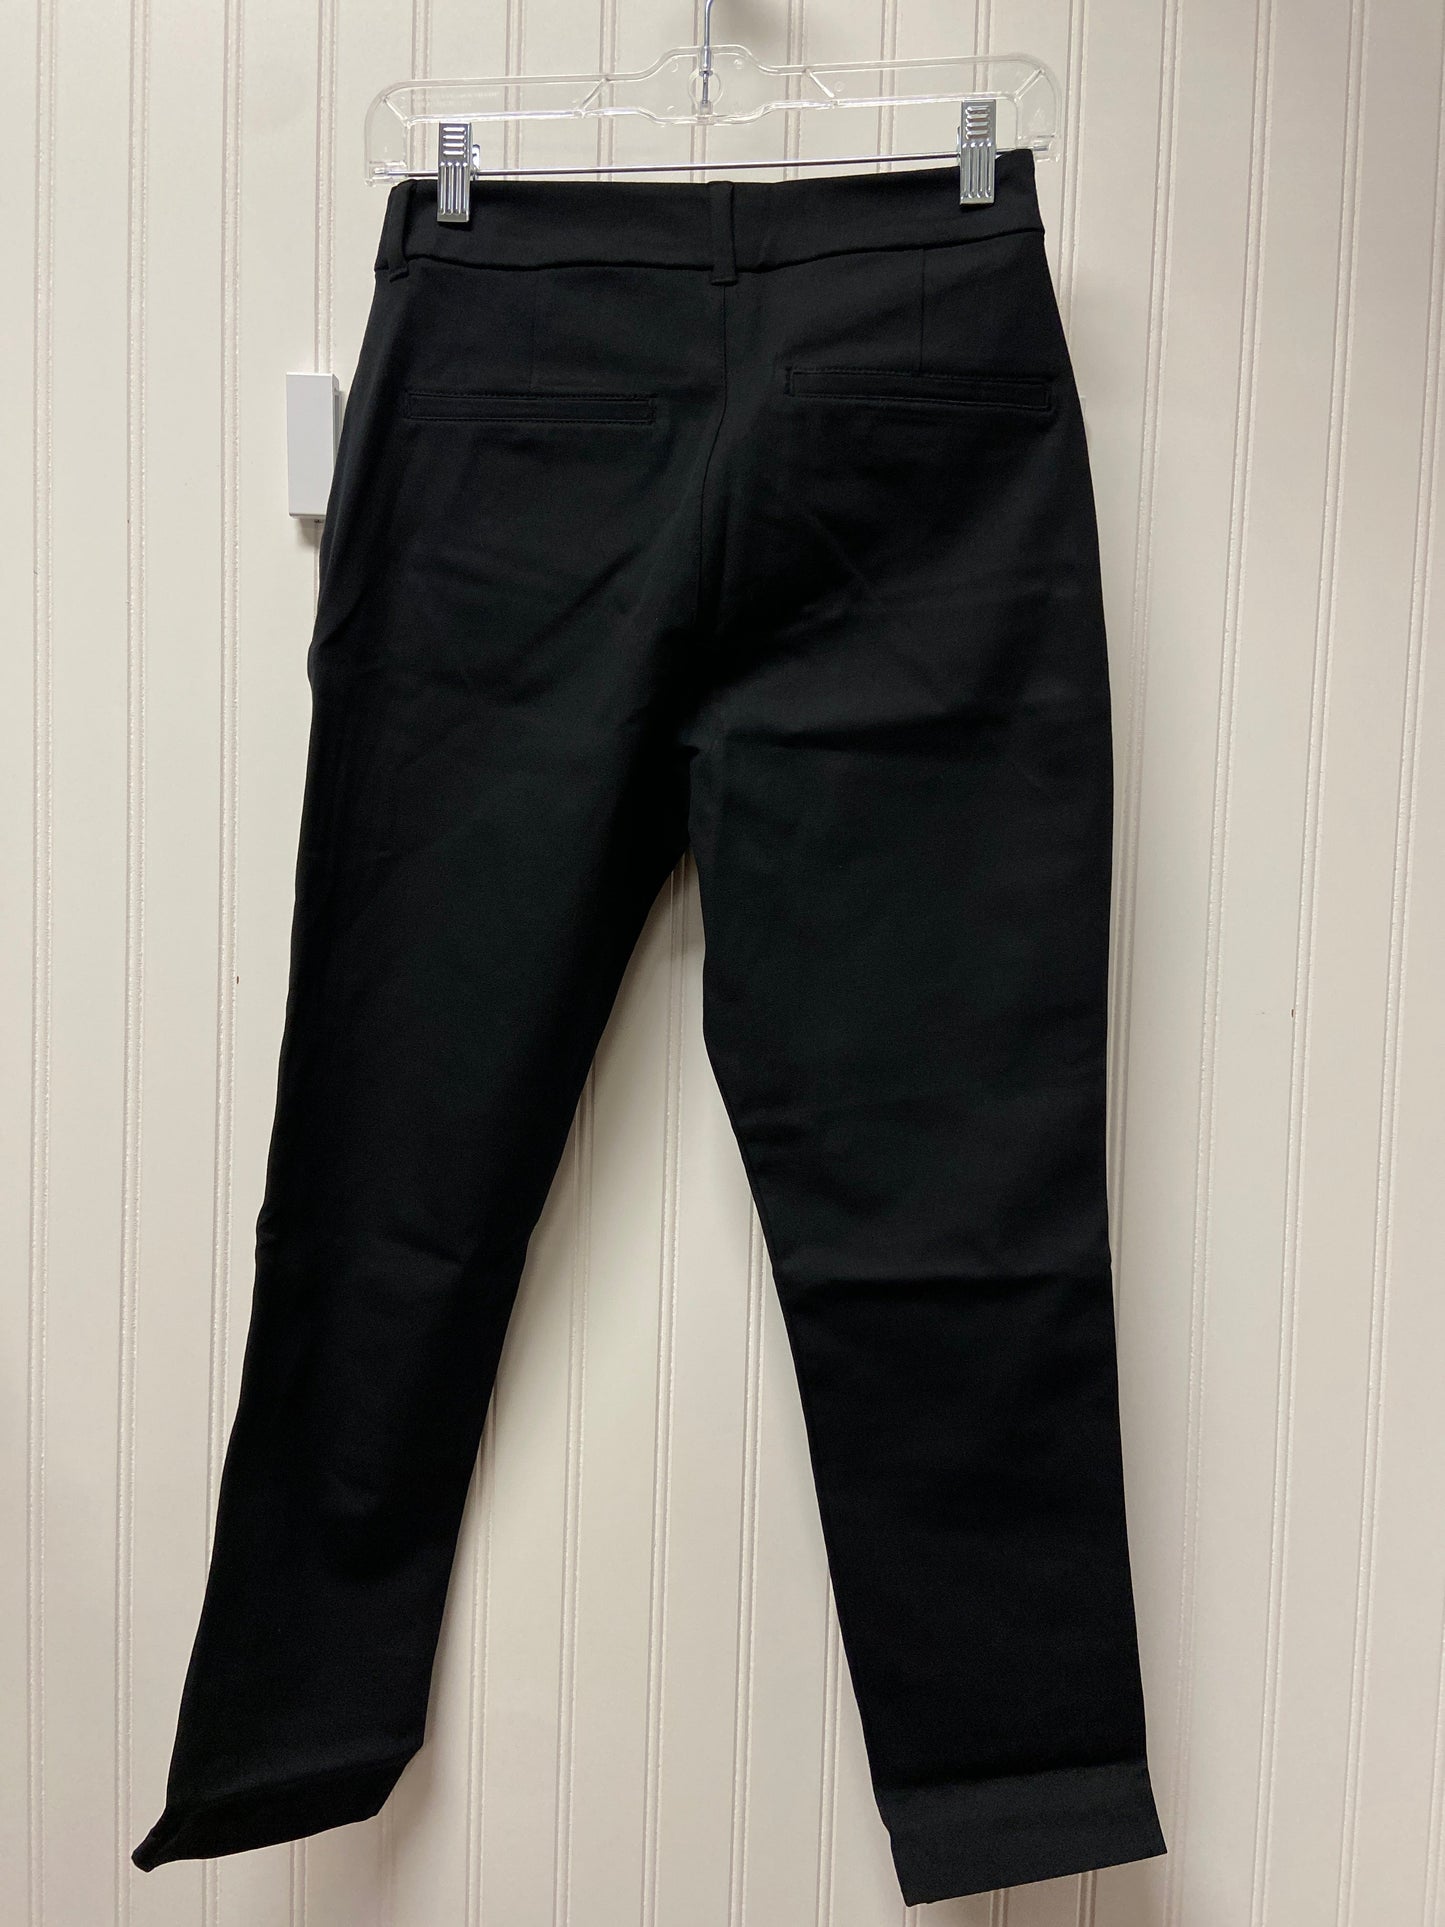 Black Pants Other Old Navy, Size 4petite